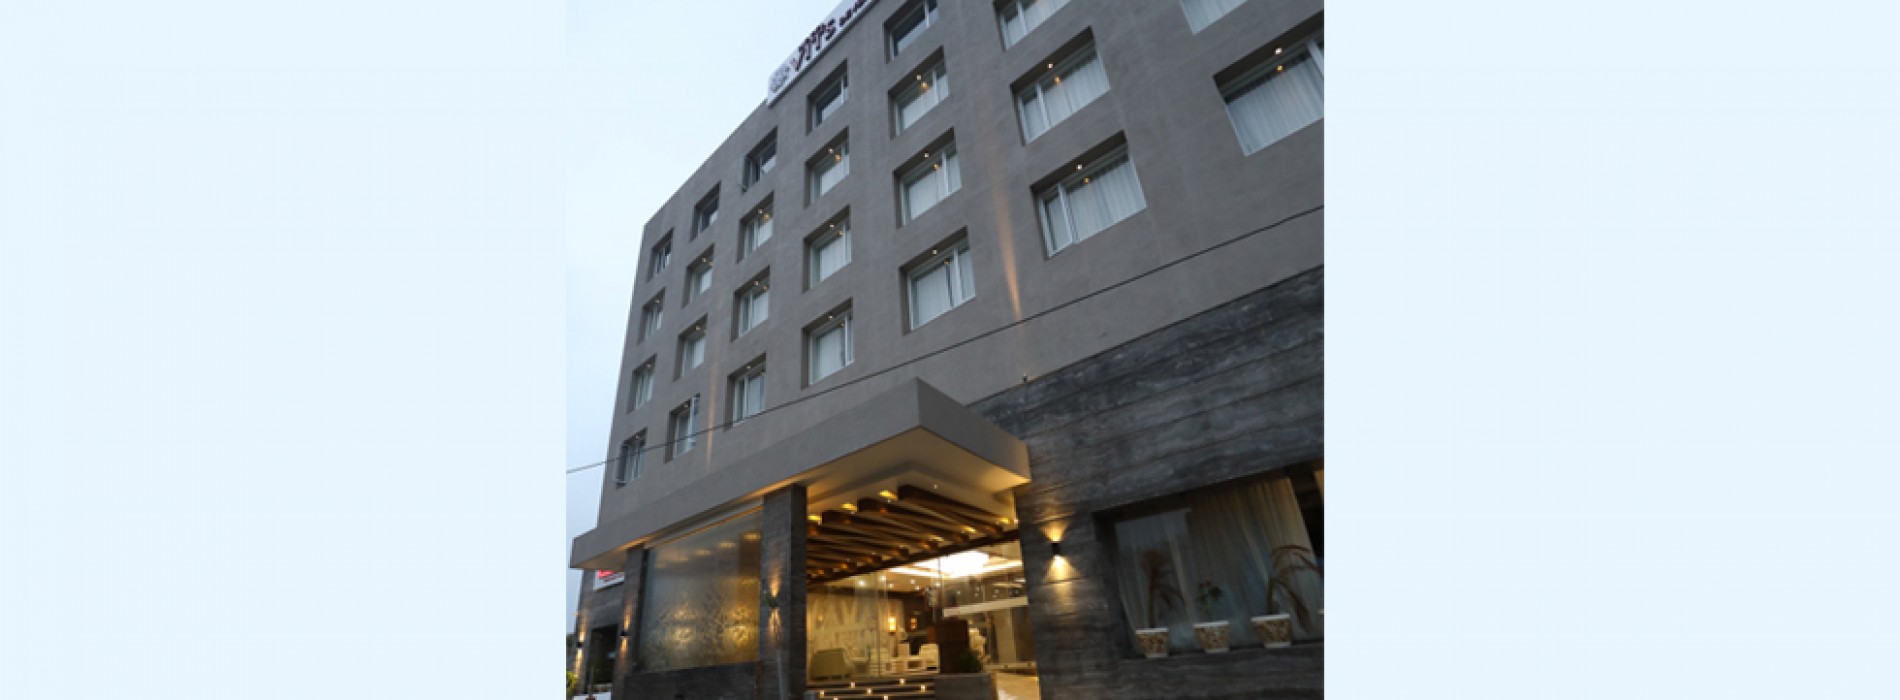 VITS Luxury Hotels announces launch of VITS Devbhumi in Dwarka